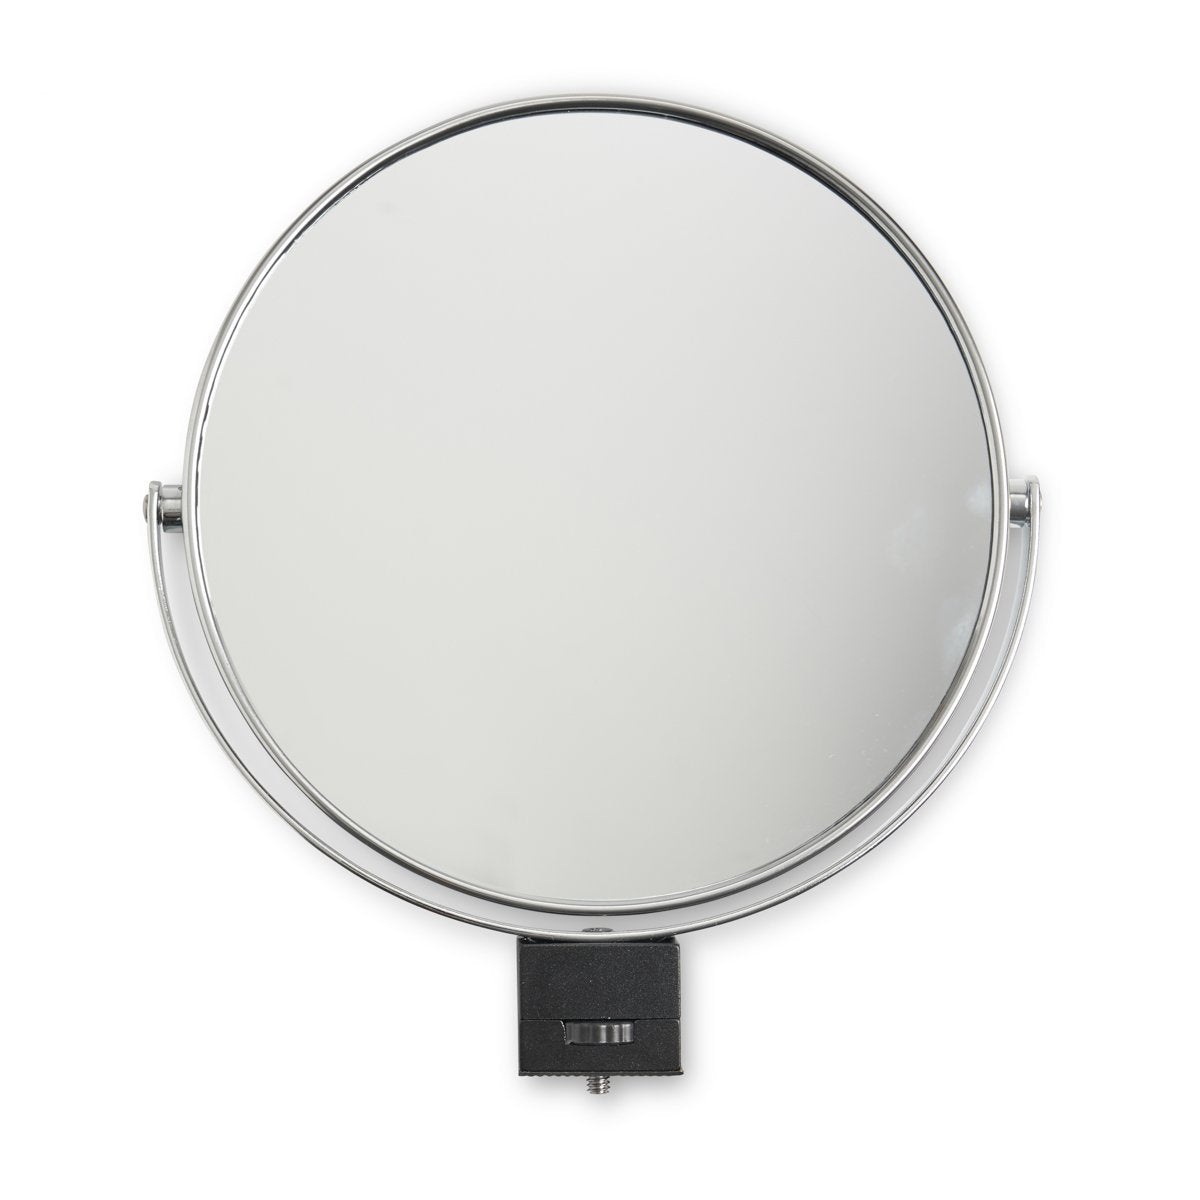 GlowPRO 2 Mirror Attachment | Luvo Store